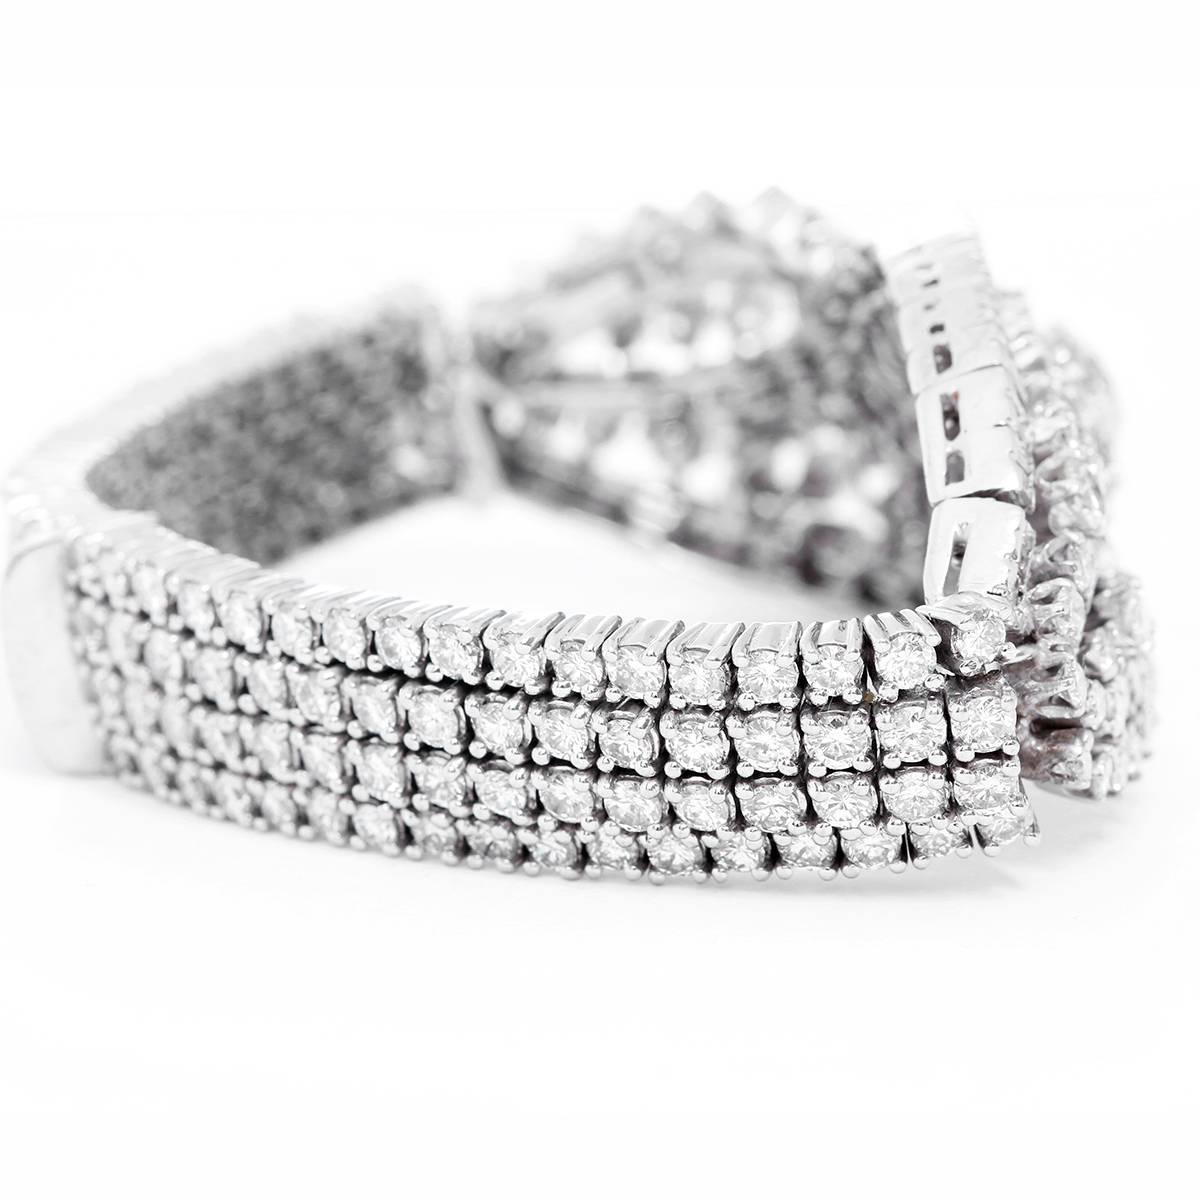 Curved Platinum Tennis Bracelet - . This beautiful Platinum bracelet circa 1940-50's. Diamonds approximately 22-25 carats. GH - VS2 Clarity. Wrist size 6.5.